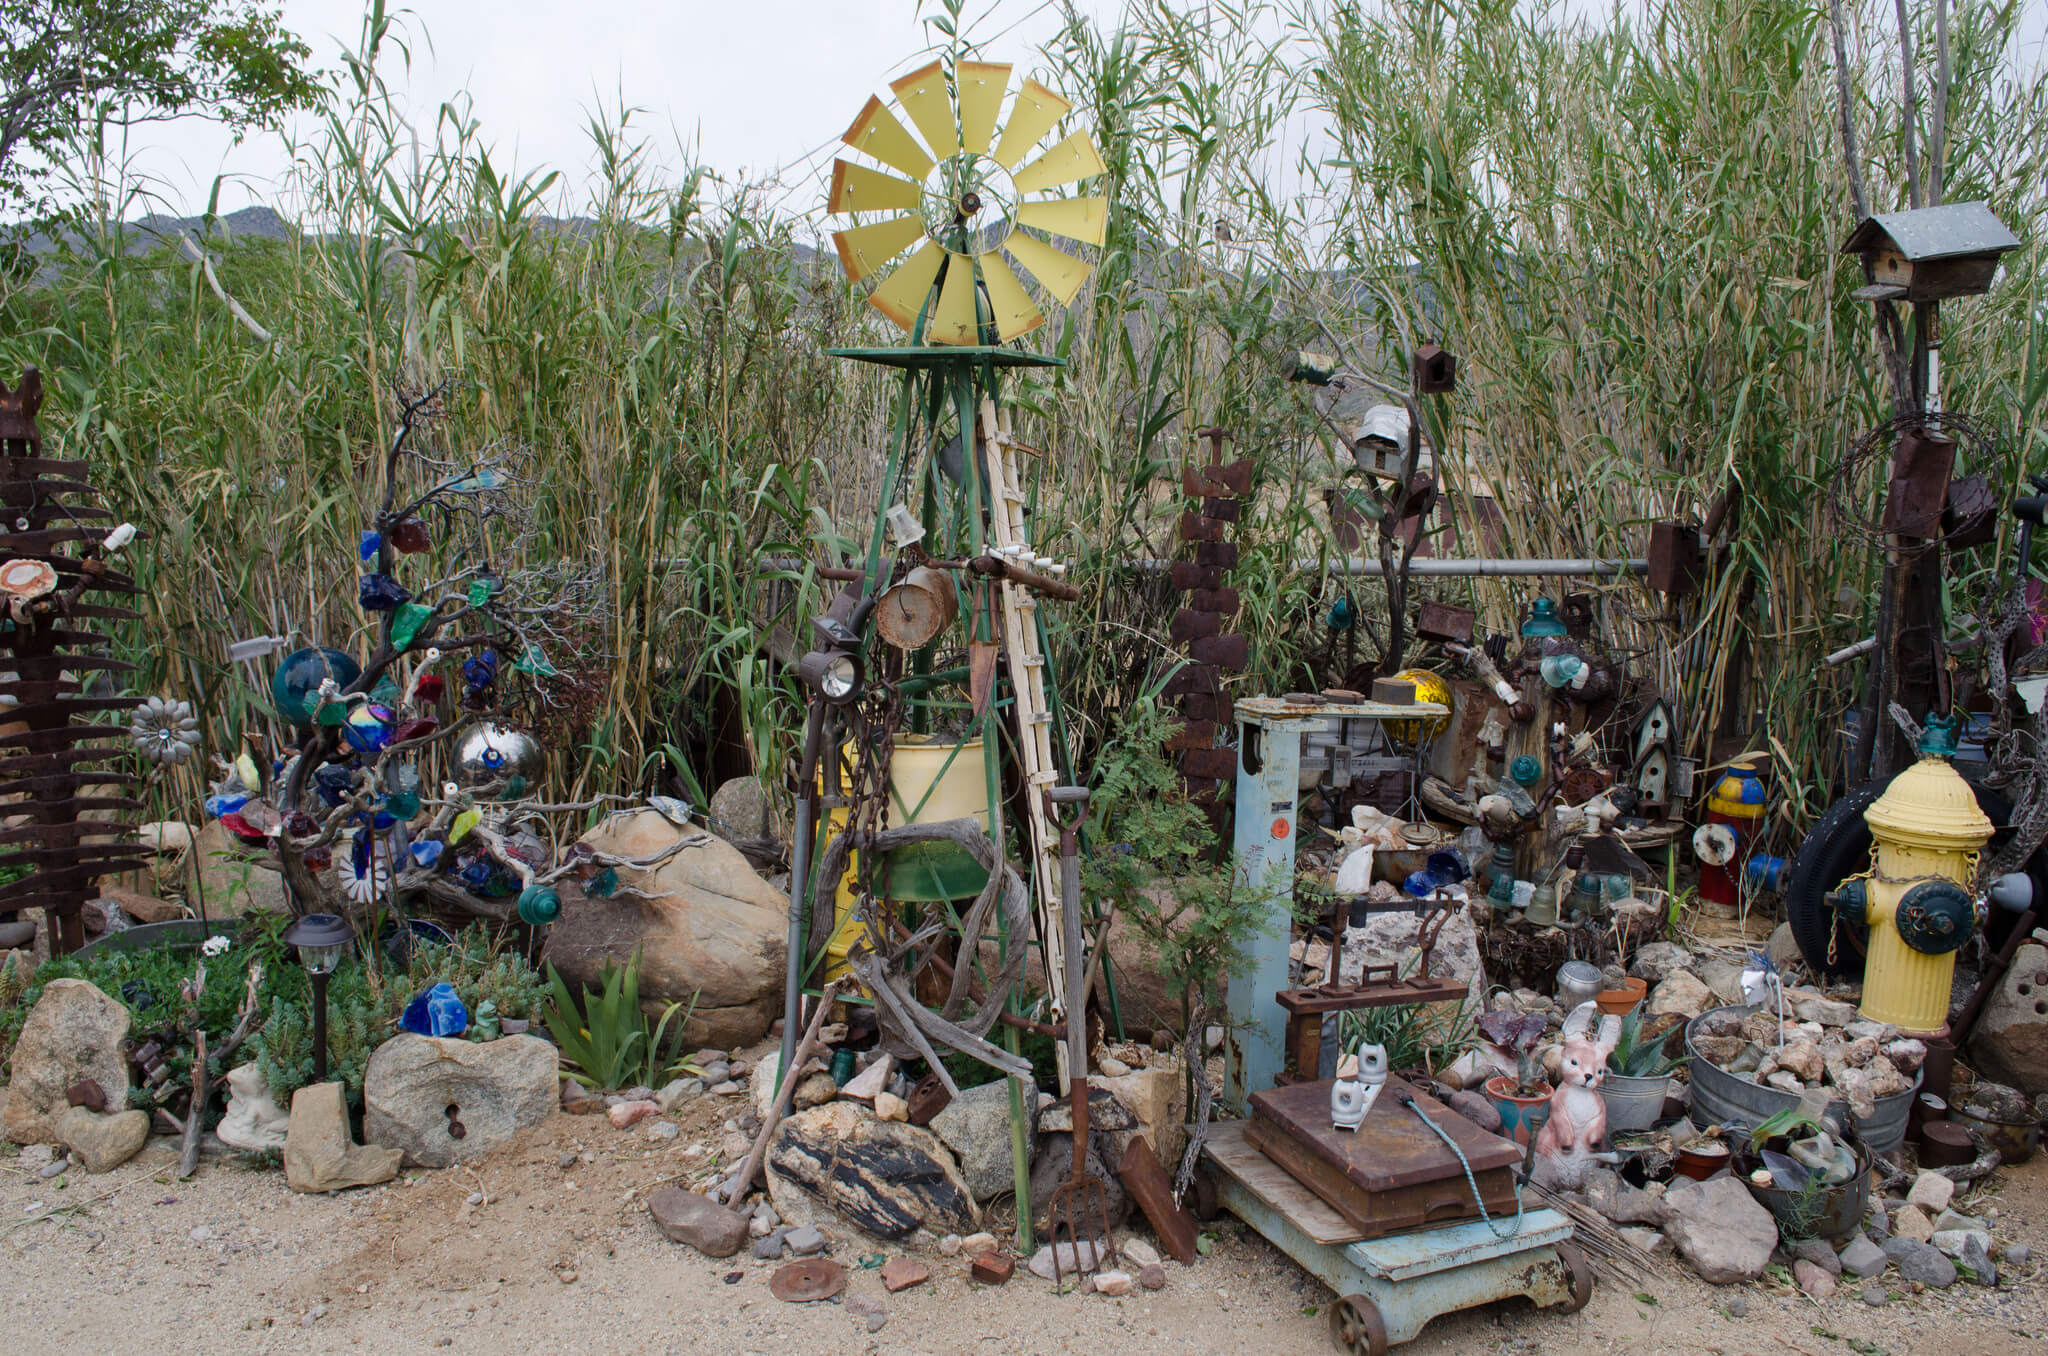 A junkyard in Chloride, AZ.
Flickr User Justin Miller